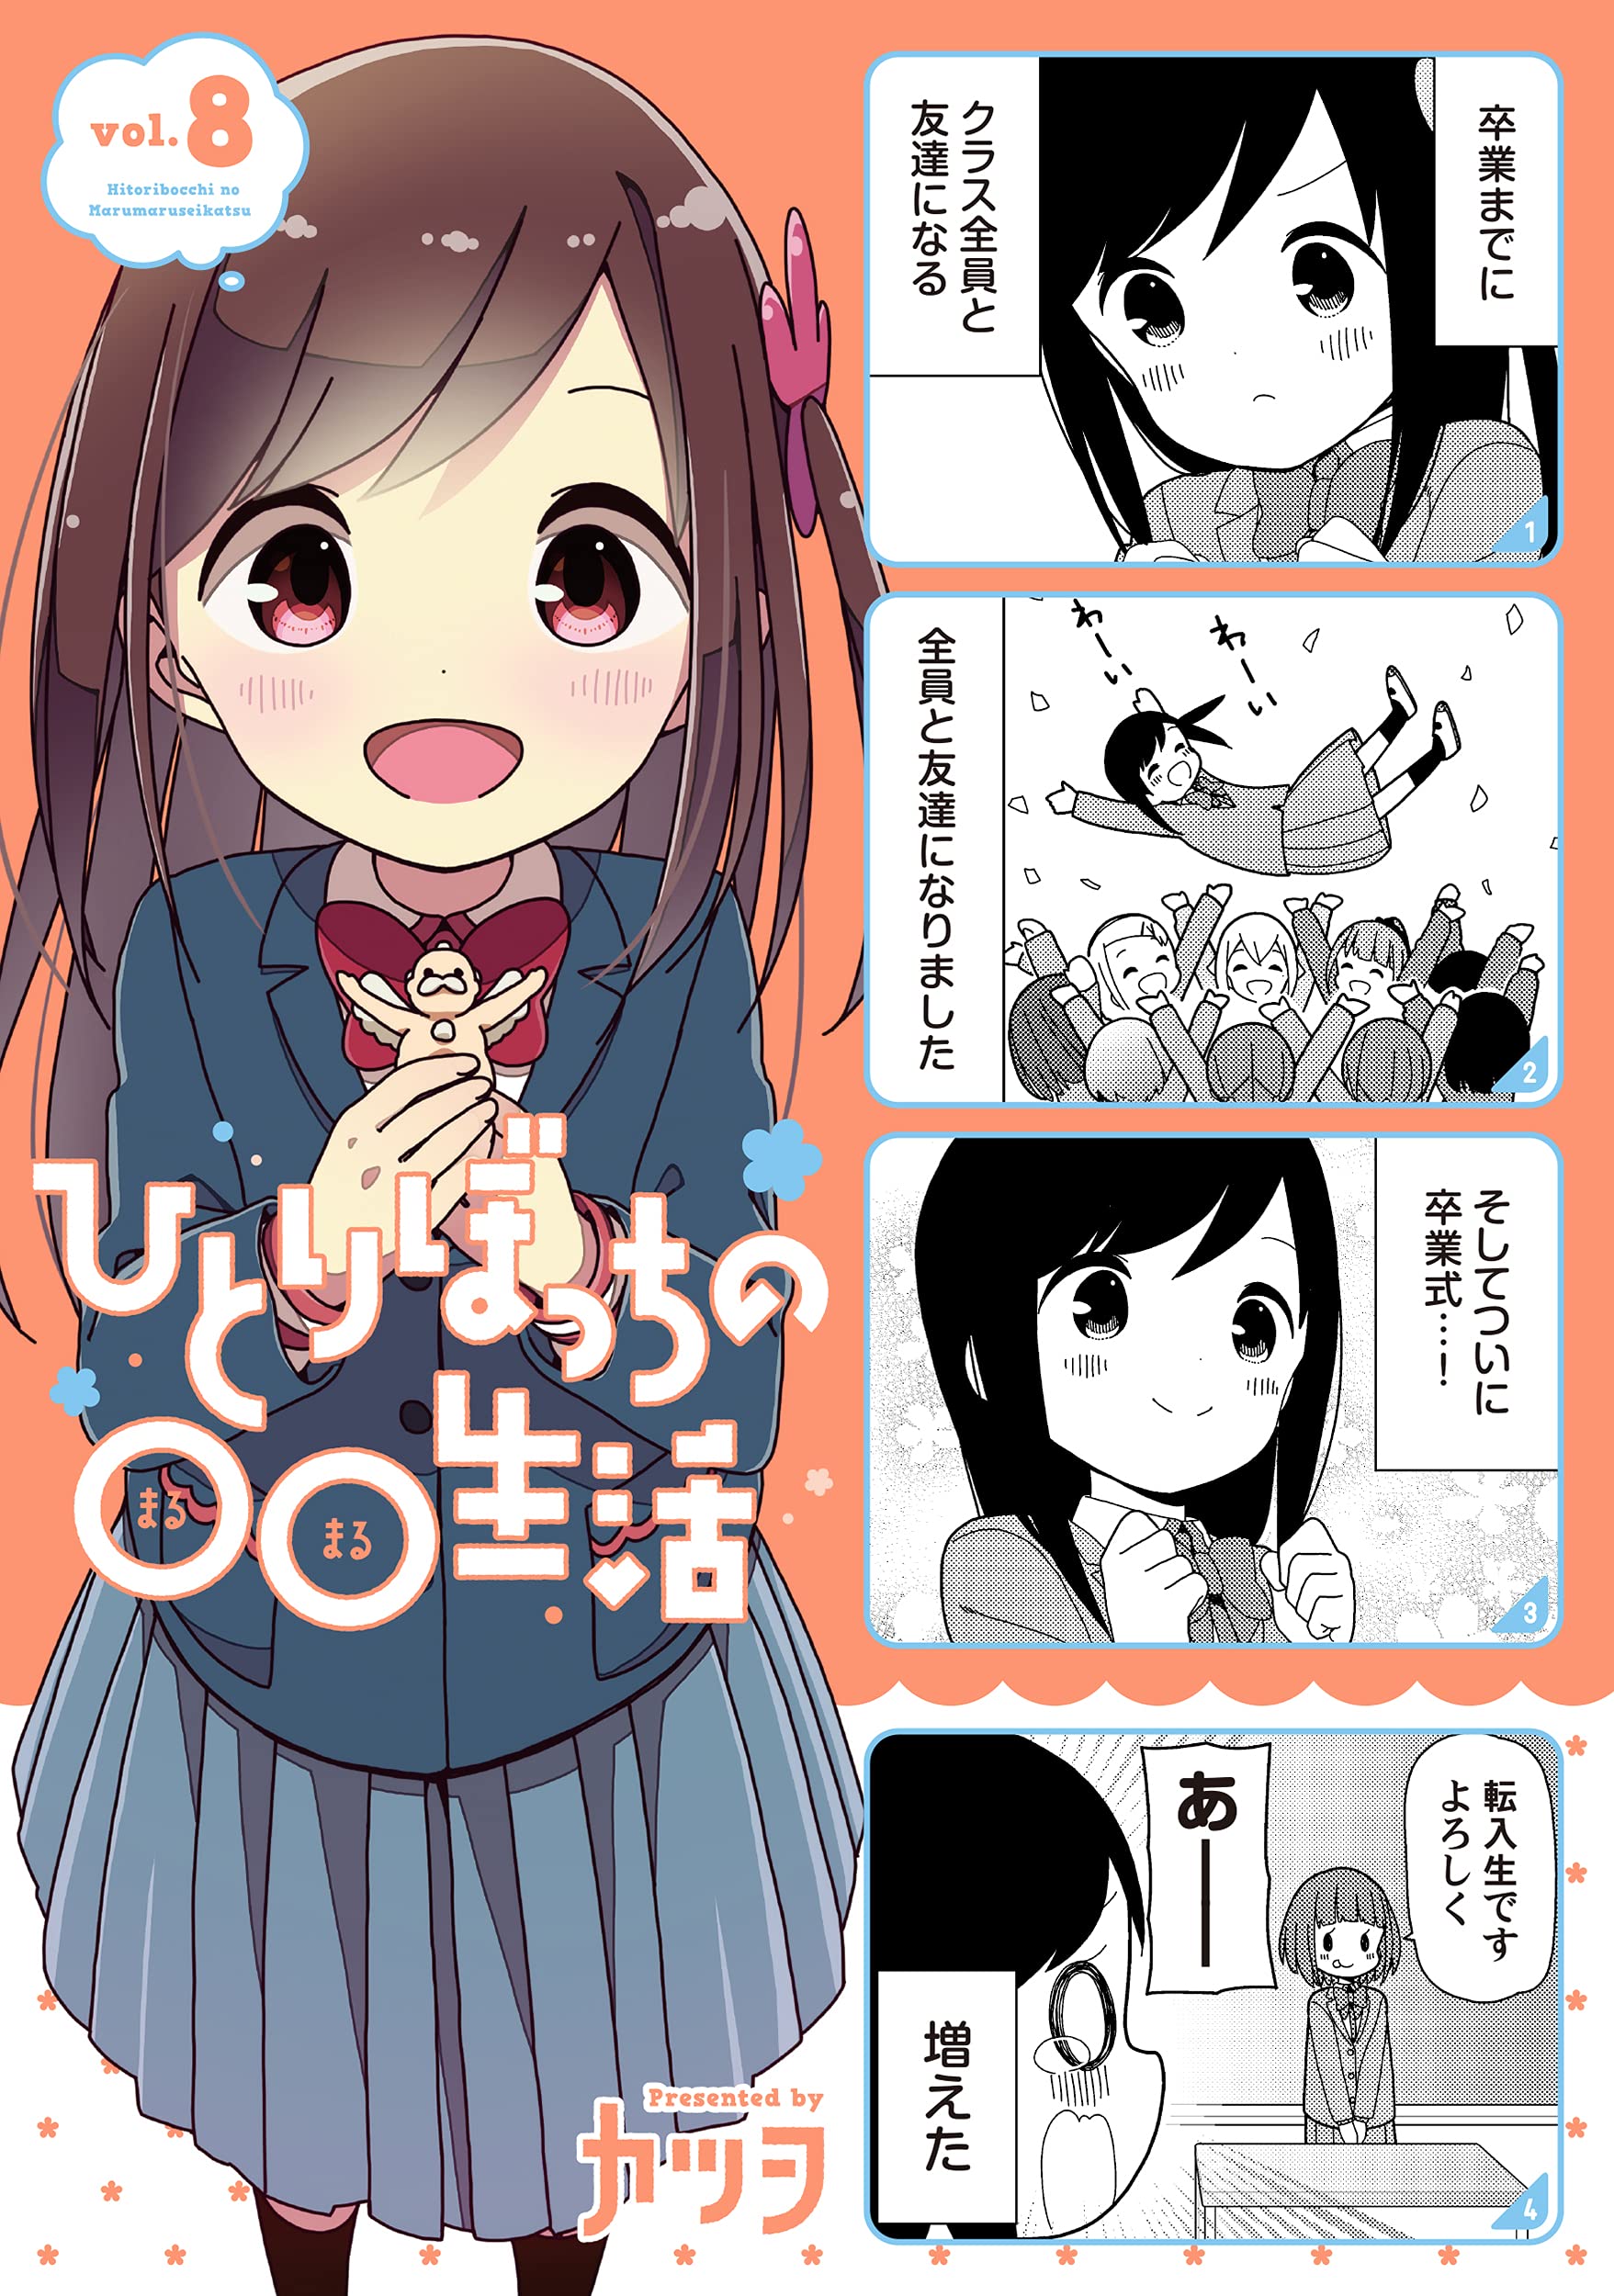 El manga Hitoribocchi no Marumaru Seikatsu revela los detalles de